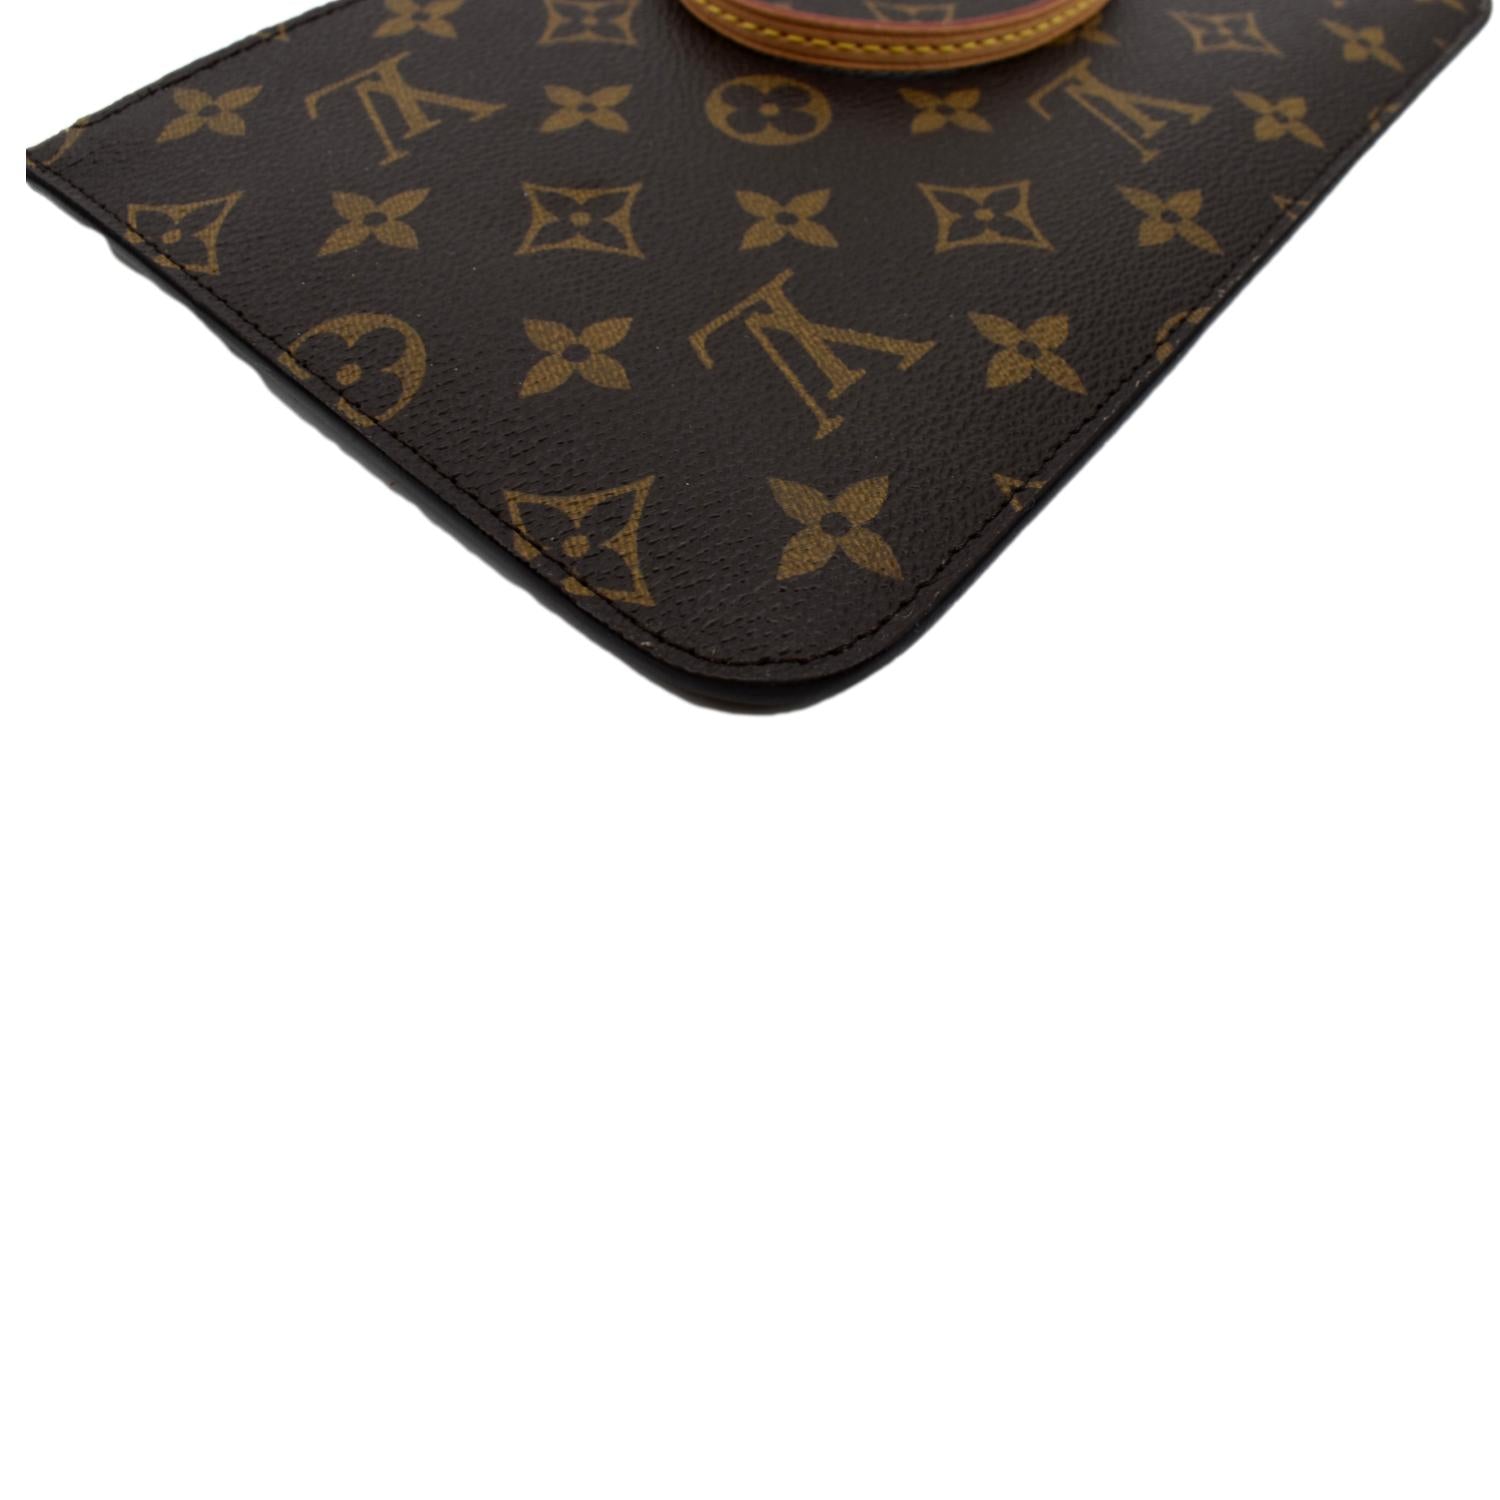 Louis Vuitton Monogram Canvas iPad Case